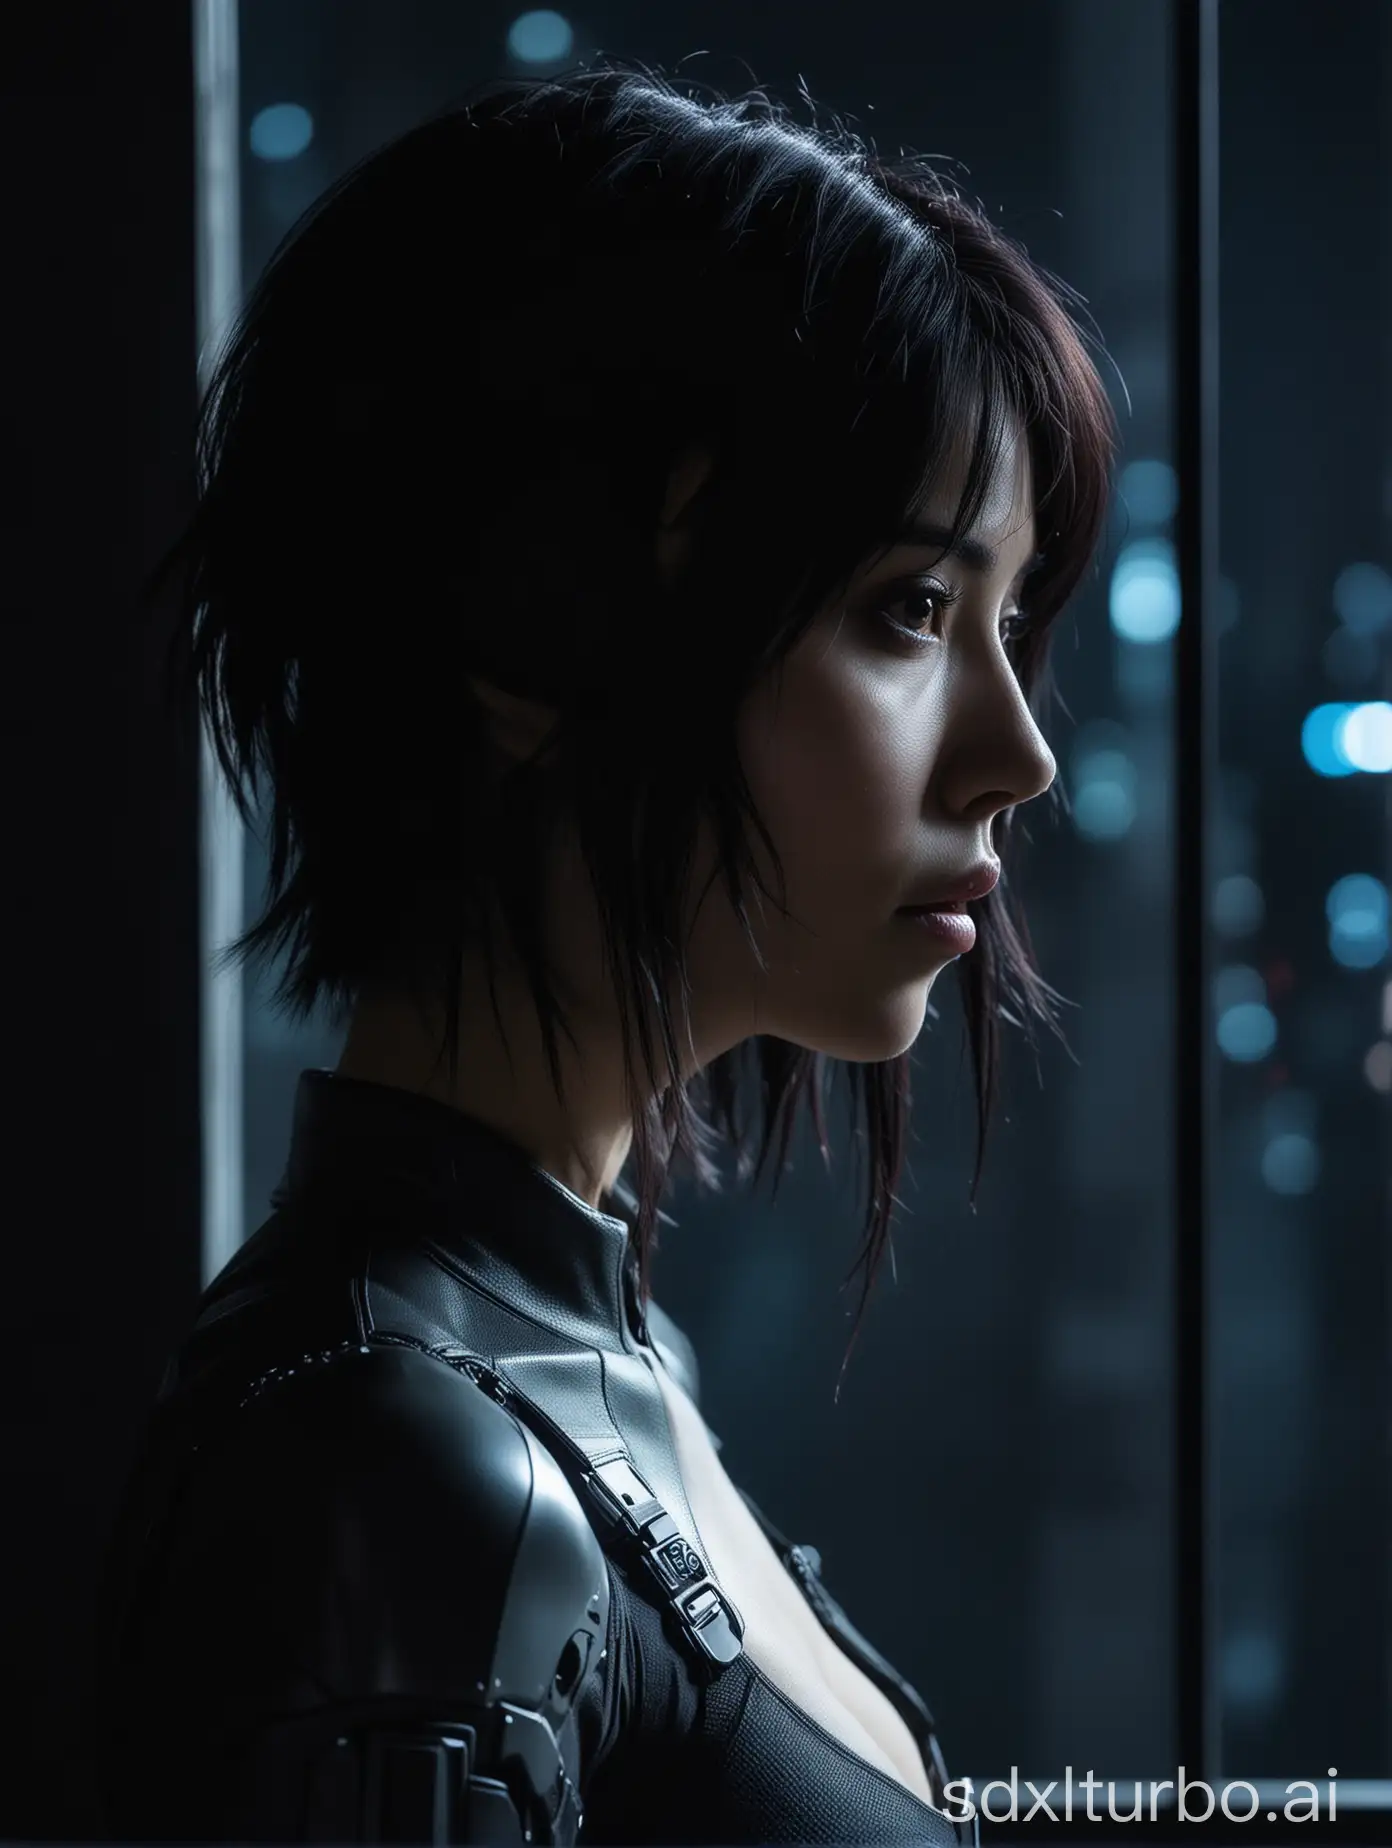 Sonoya Mizuno portrayed as Motoko Kusanagi from ghost in the shell, blank stare, silhouetted against a window, night, dark room, cyberpunk